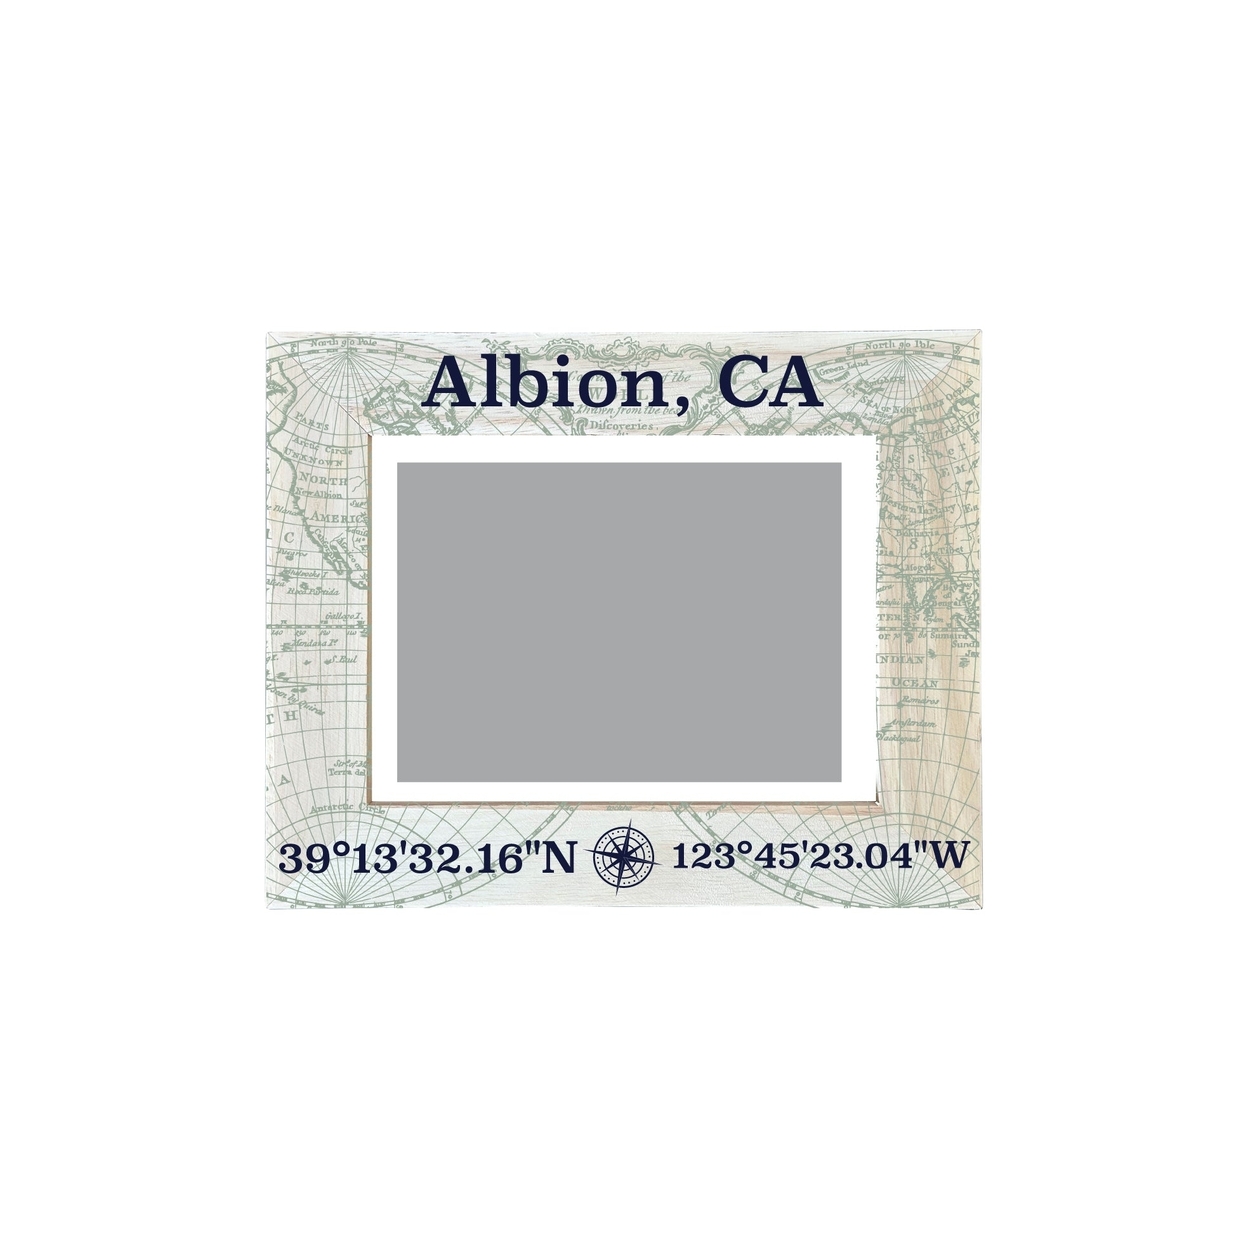 Albion California Souvenir Wooden Photo Frame Compass Coordinates Design Matted To 4 X 6